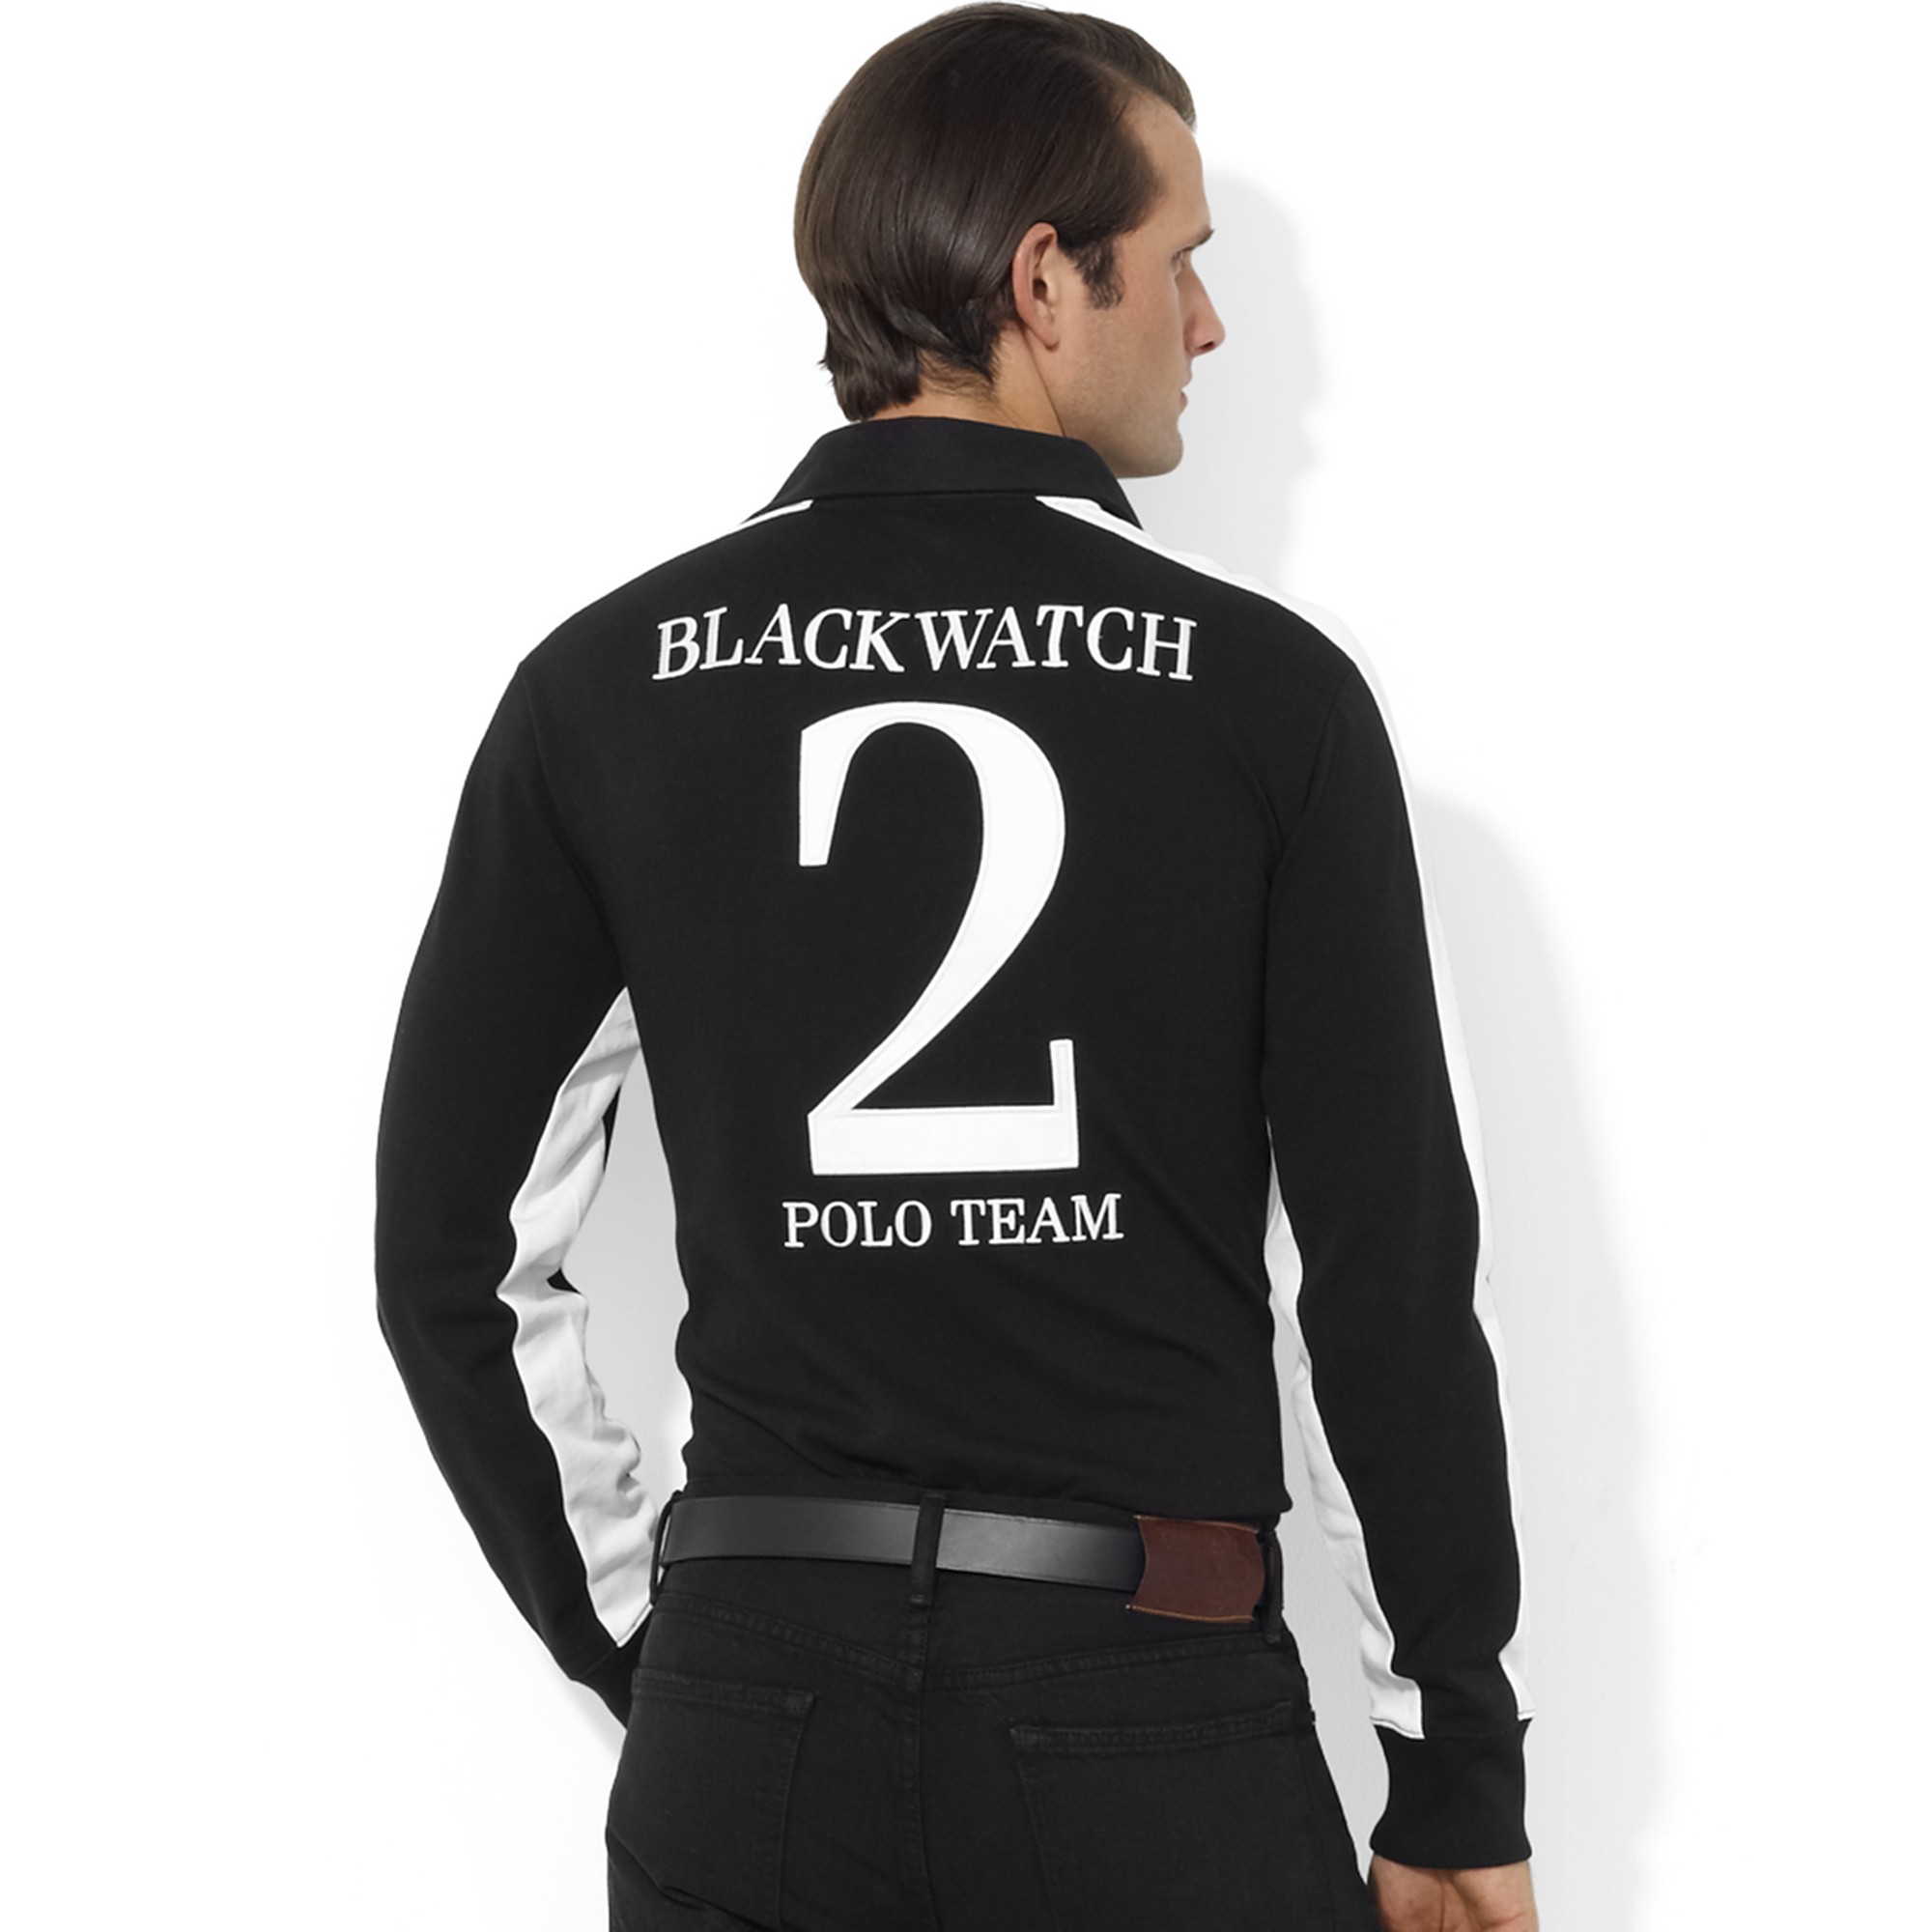 black watch polo team long sleeve